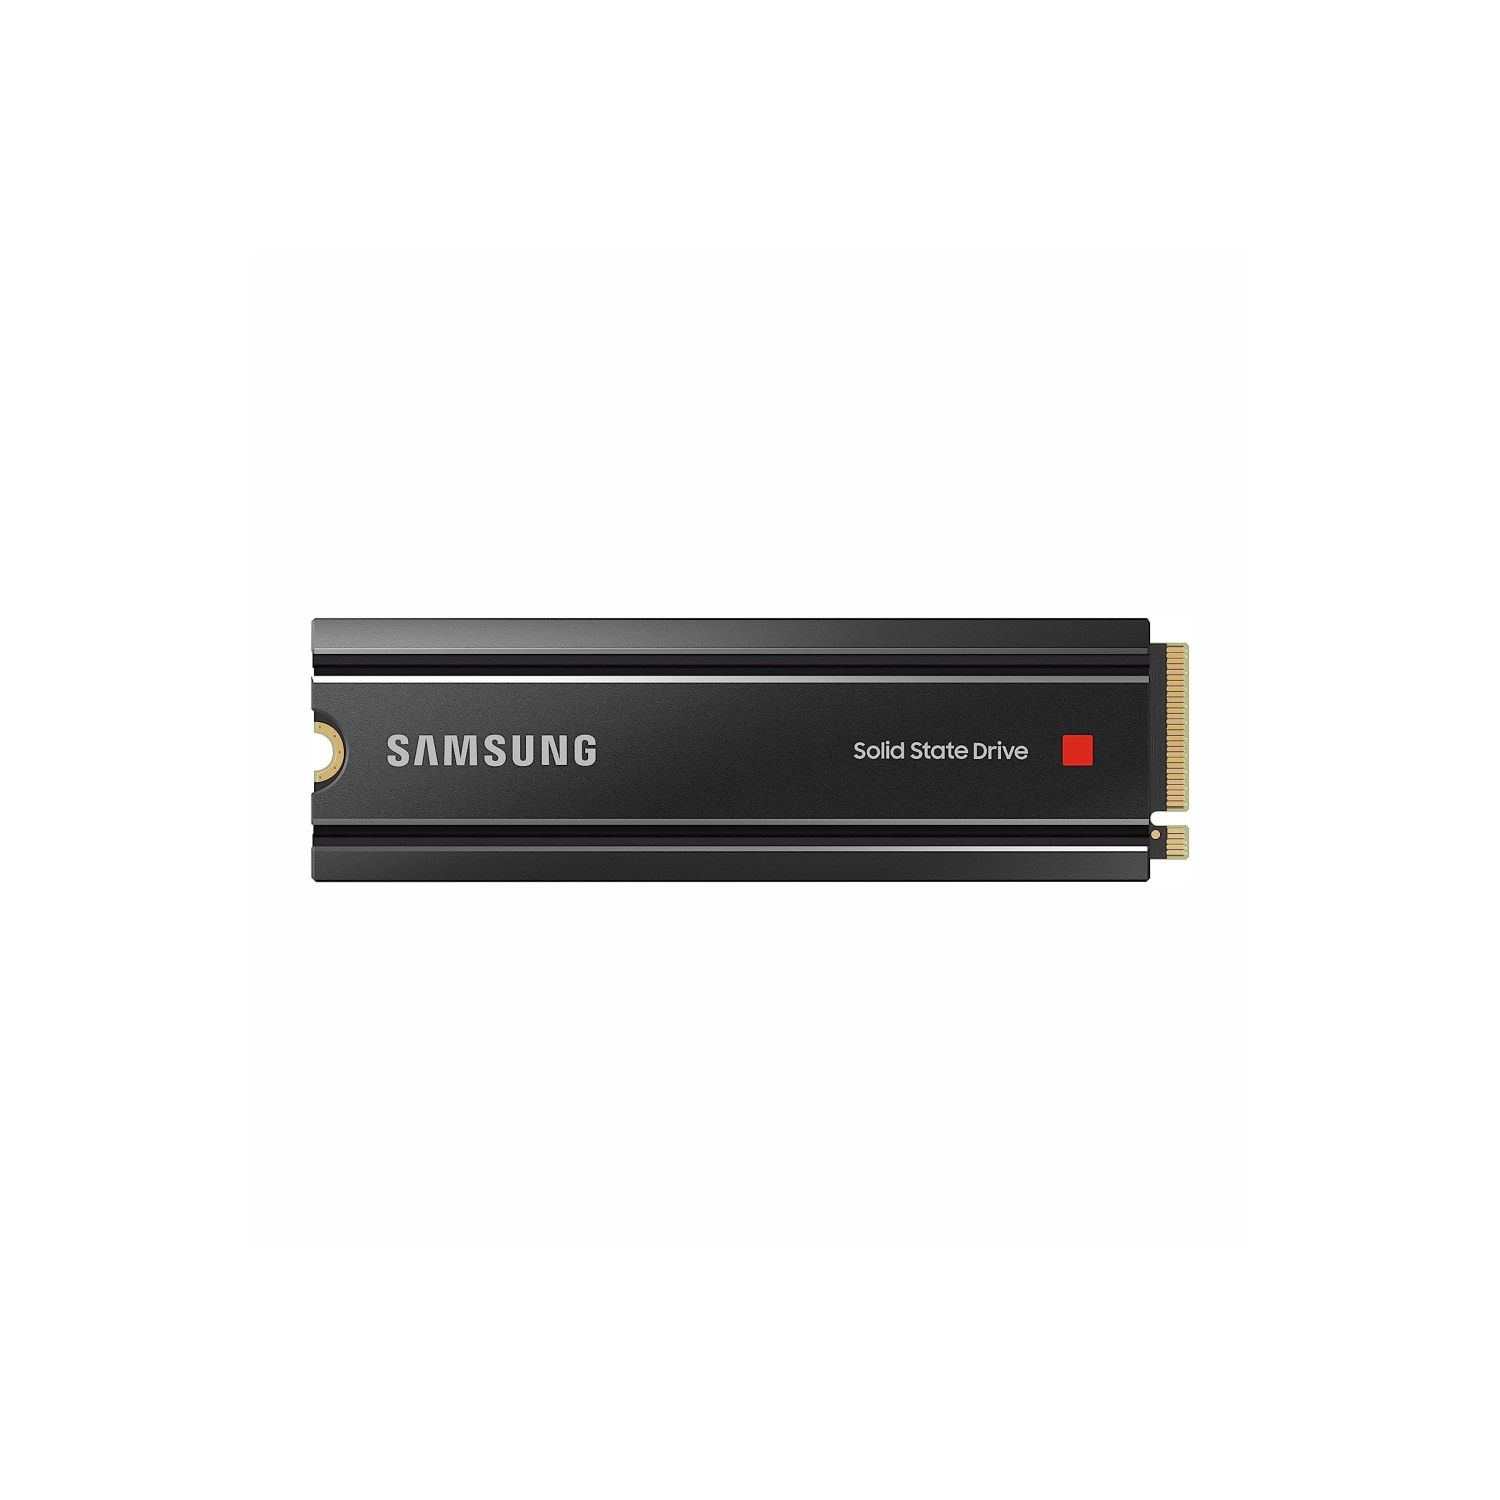 Refurbished (Good) Samsung 980 PRO Series - 1TB SSD PCIe 4.0 NVME - M.2 Internal Solid State Drive with Heatsink